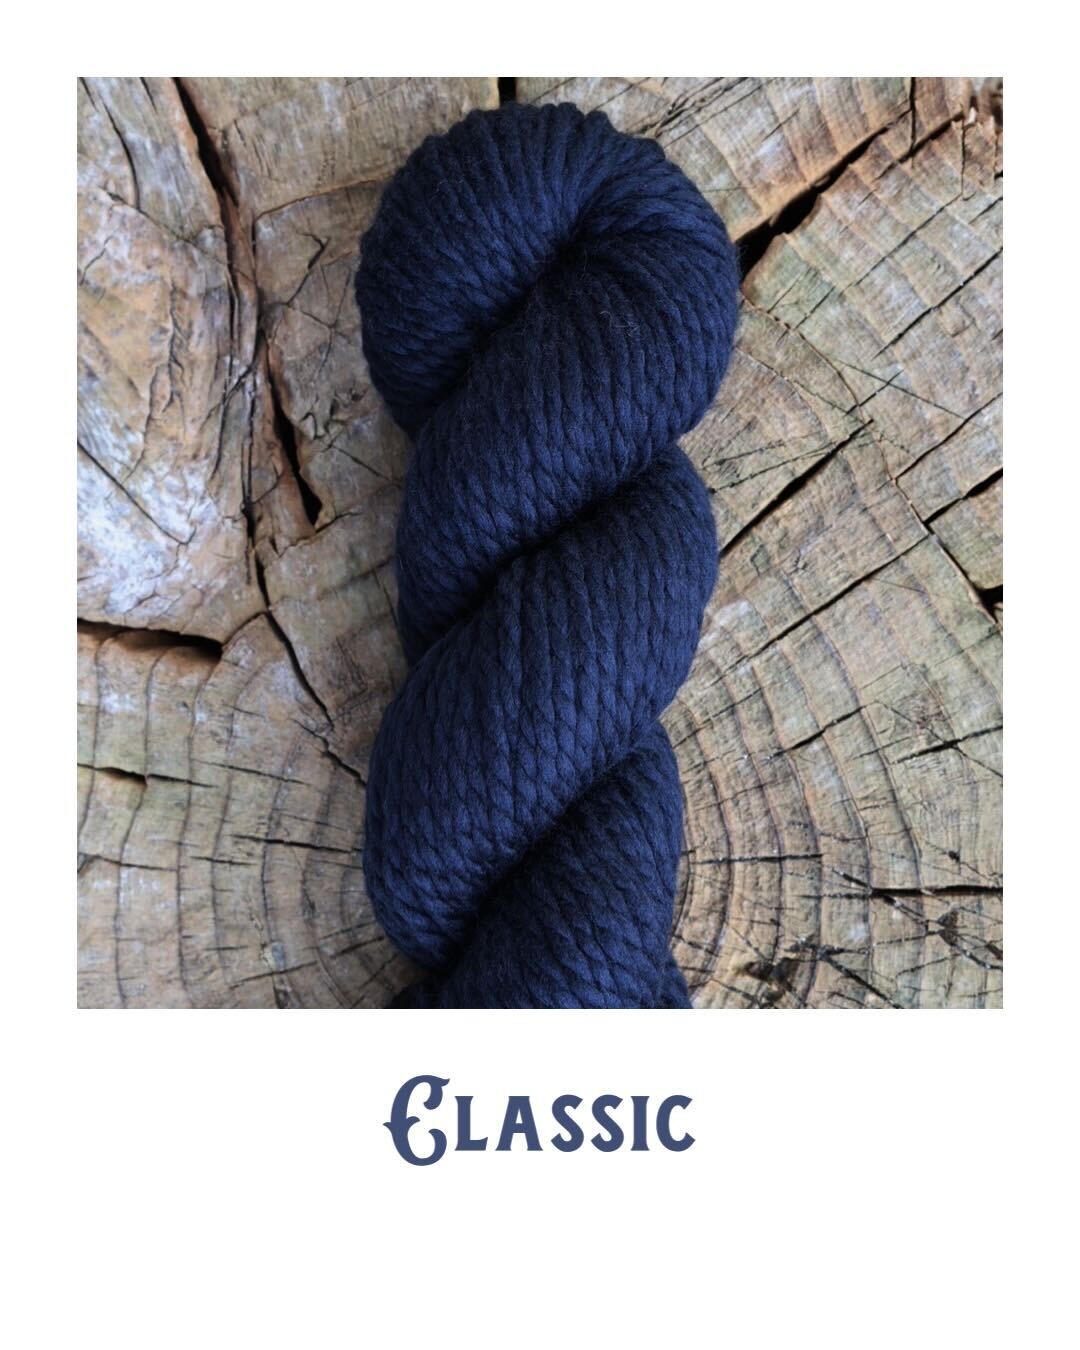 Classic Yarn: Alpaca, Wool, Cotton & More